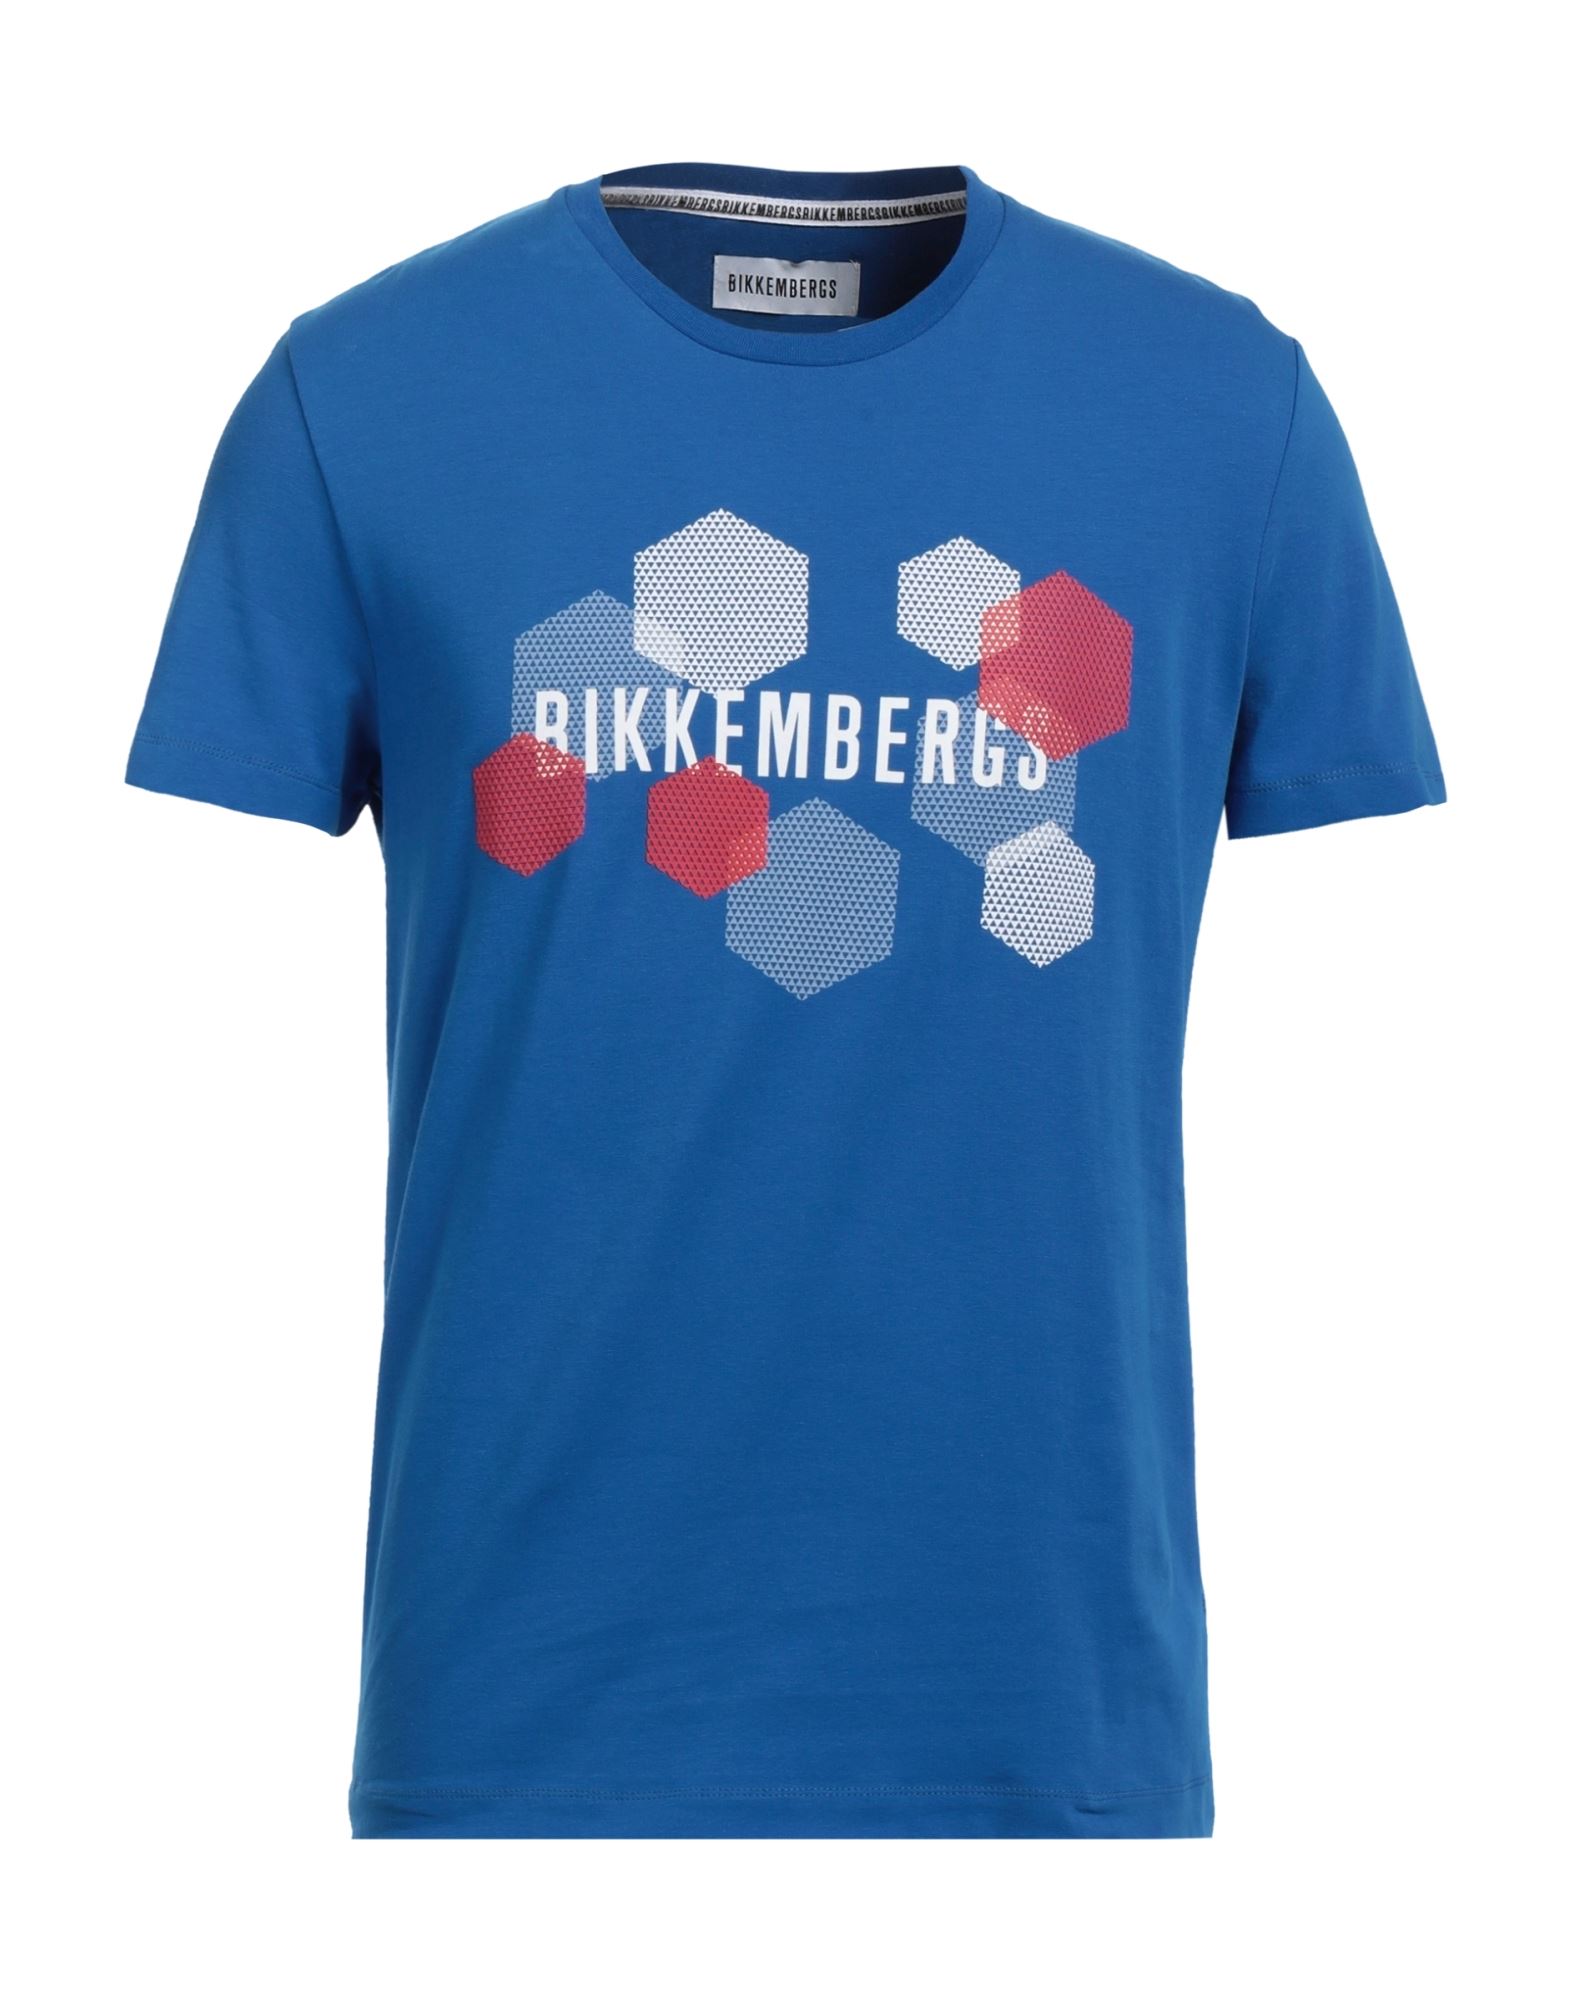 BIKKEMBERGS T-shirts Herren Blau von BIKKEMBERGS